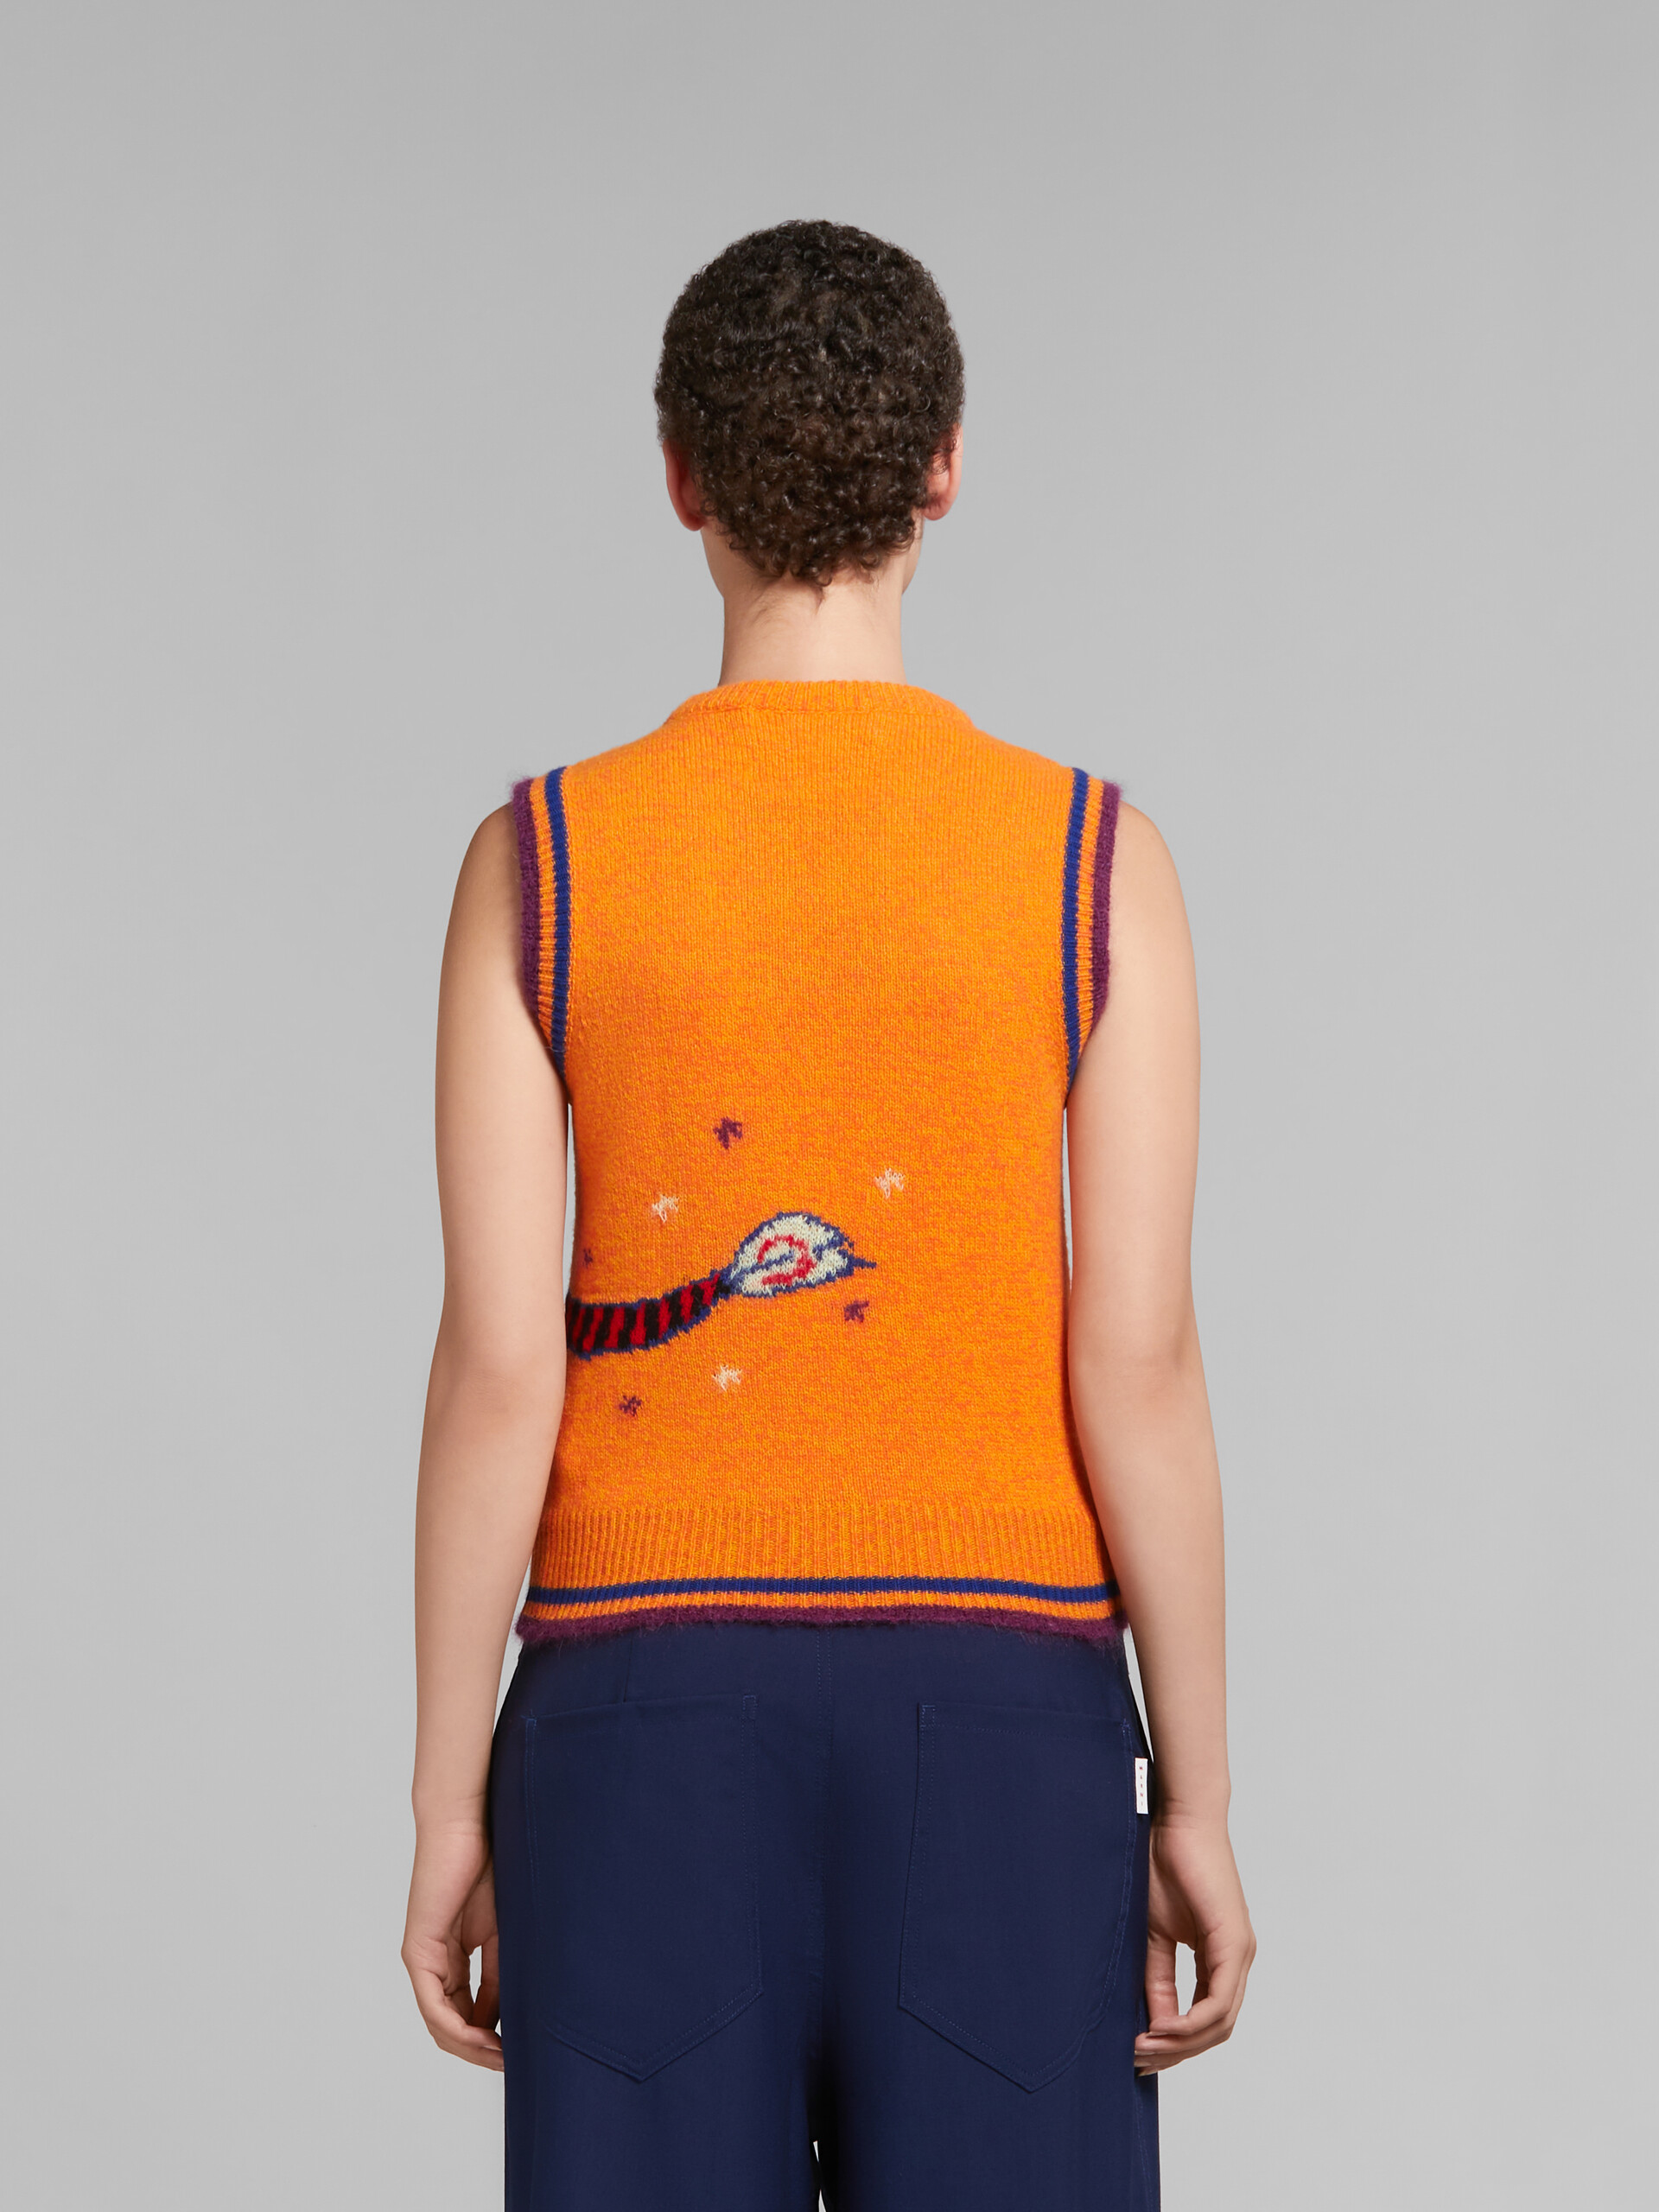 Jersey sin mangas naranja de lana y cachemira con dragón de jacquard - jerseys - Image 3